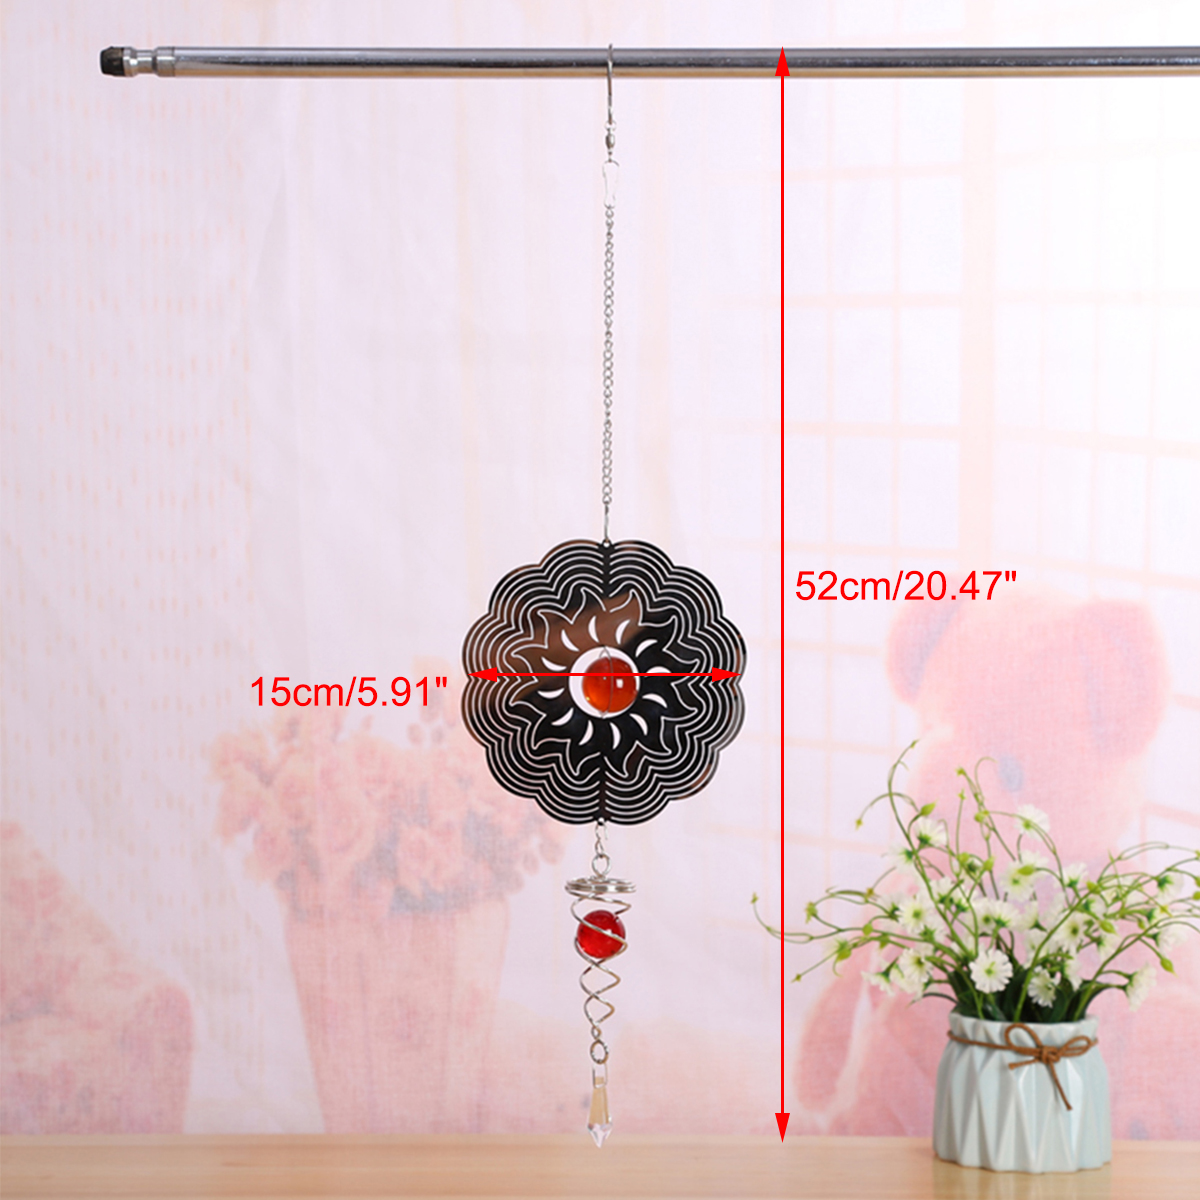 3D-Metal-Hanging-Silent-Wind-Spinner-Wind-Chimes-Bell-Garden-Decor-Ball-In-Center-1639639-12